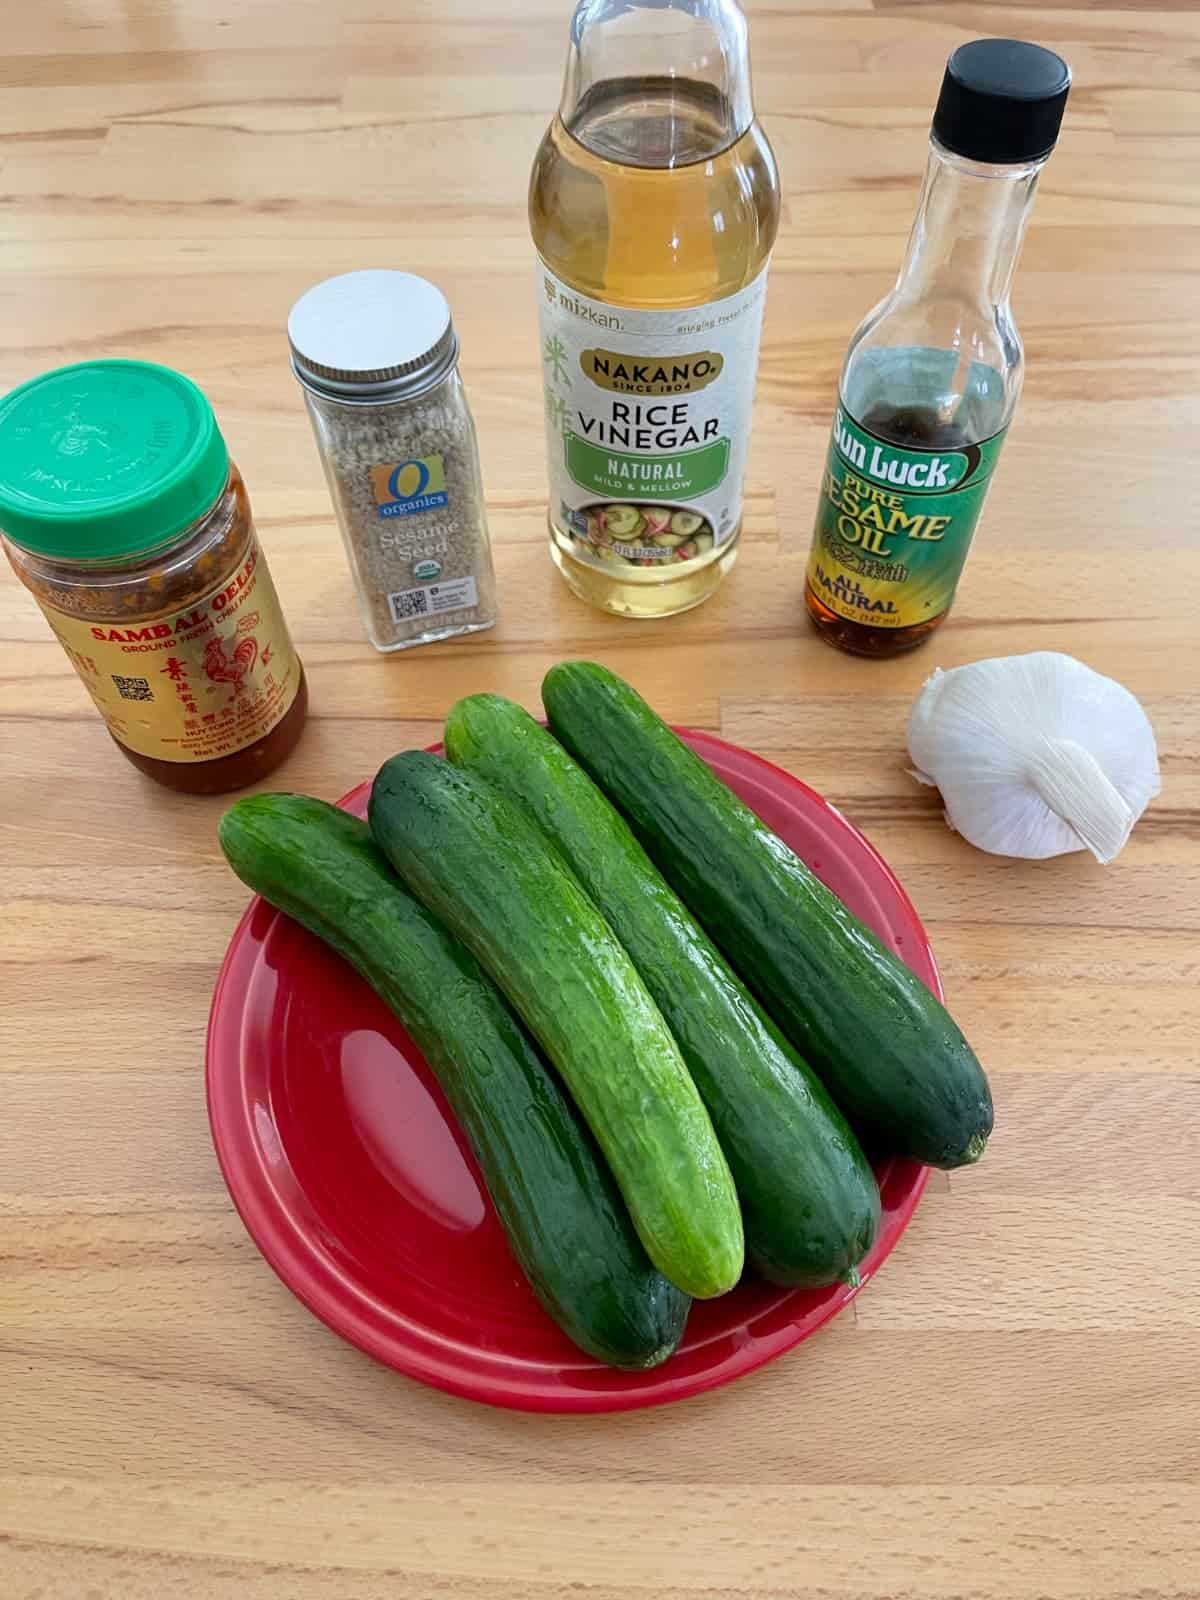 Ingredients for making spicy cucumber salad including mini cucumbers, sesame seeds, sesame oil, rice vinegar, garlic and Sambal oelek.